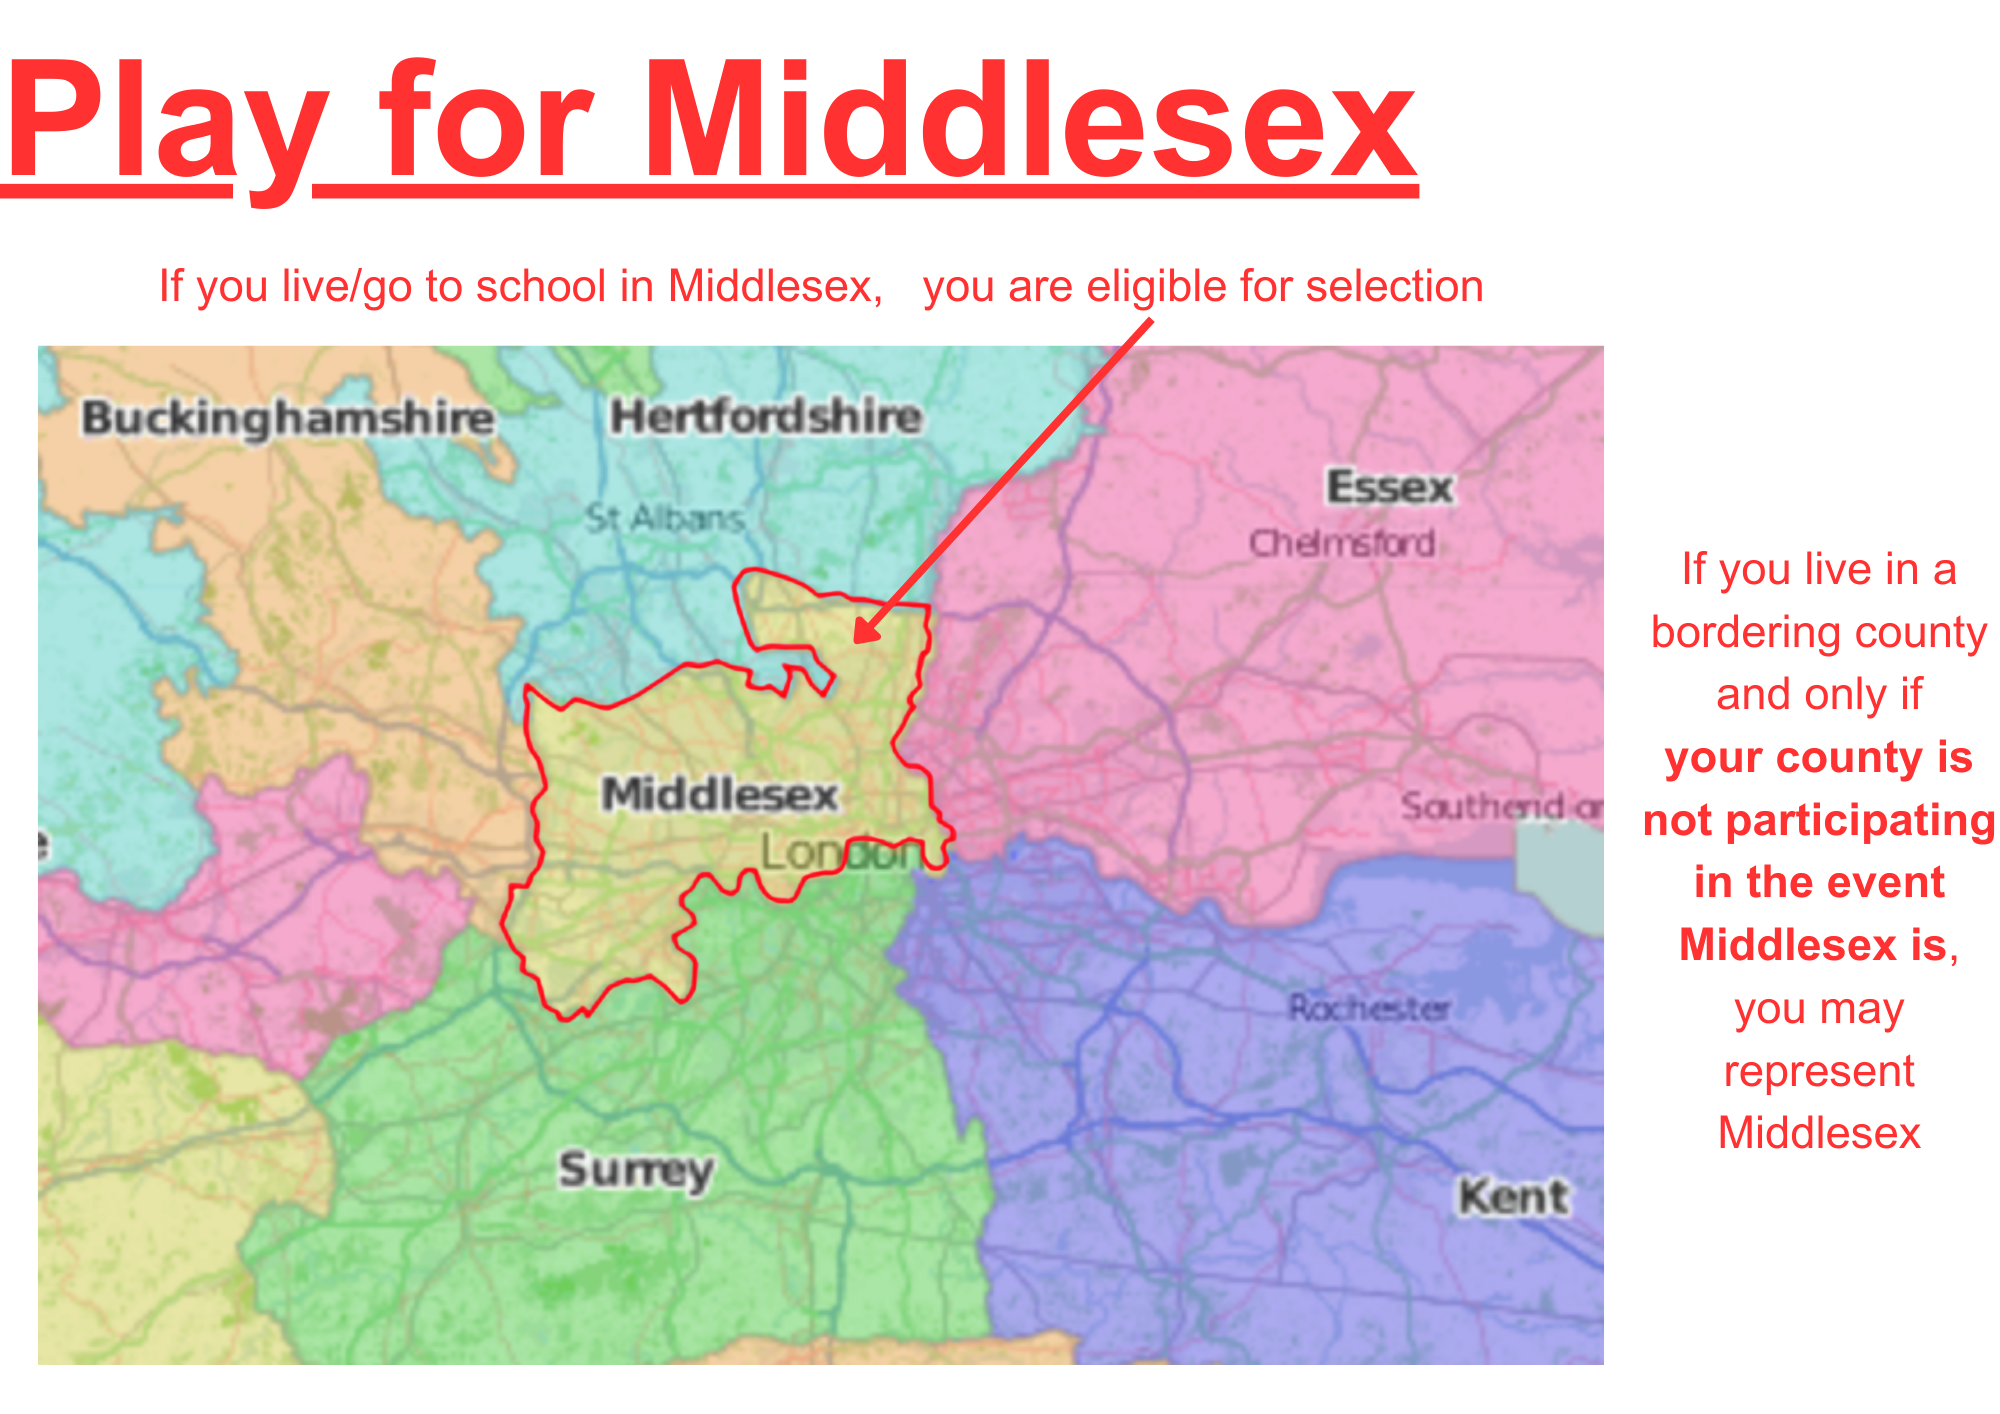 Middlesex team eligibility